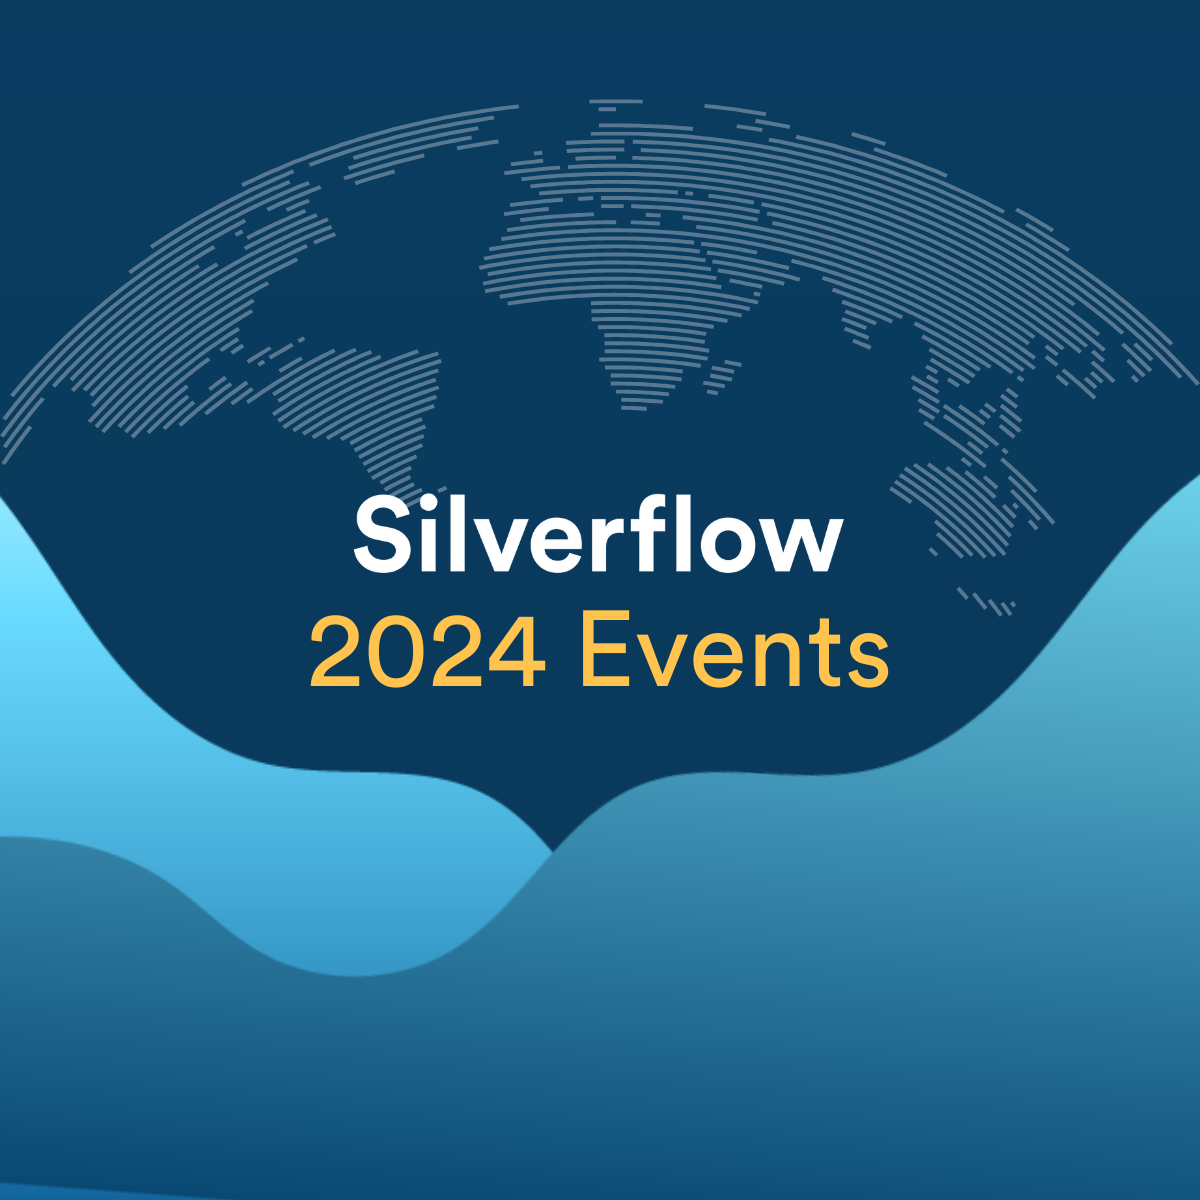 Silverflow 2024 Events